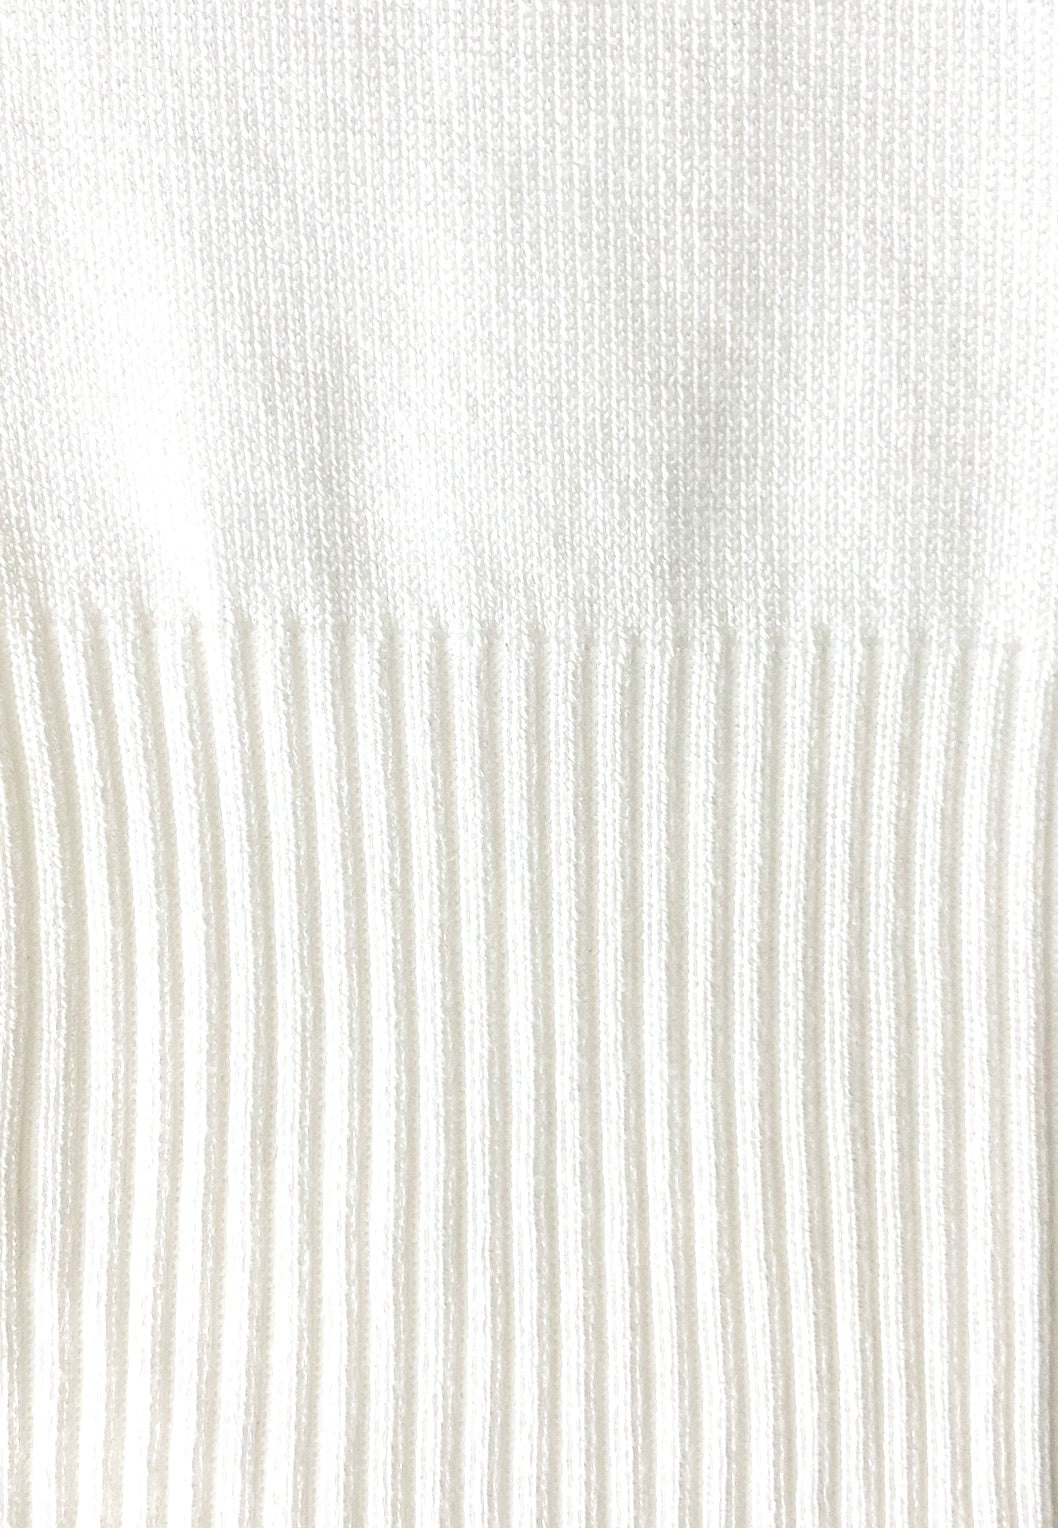 Long Cardigan Long Sleeve Open Front Knit Cardigan  - White